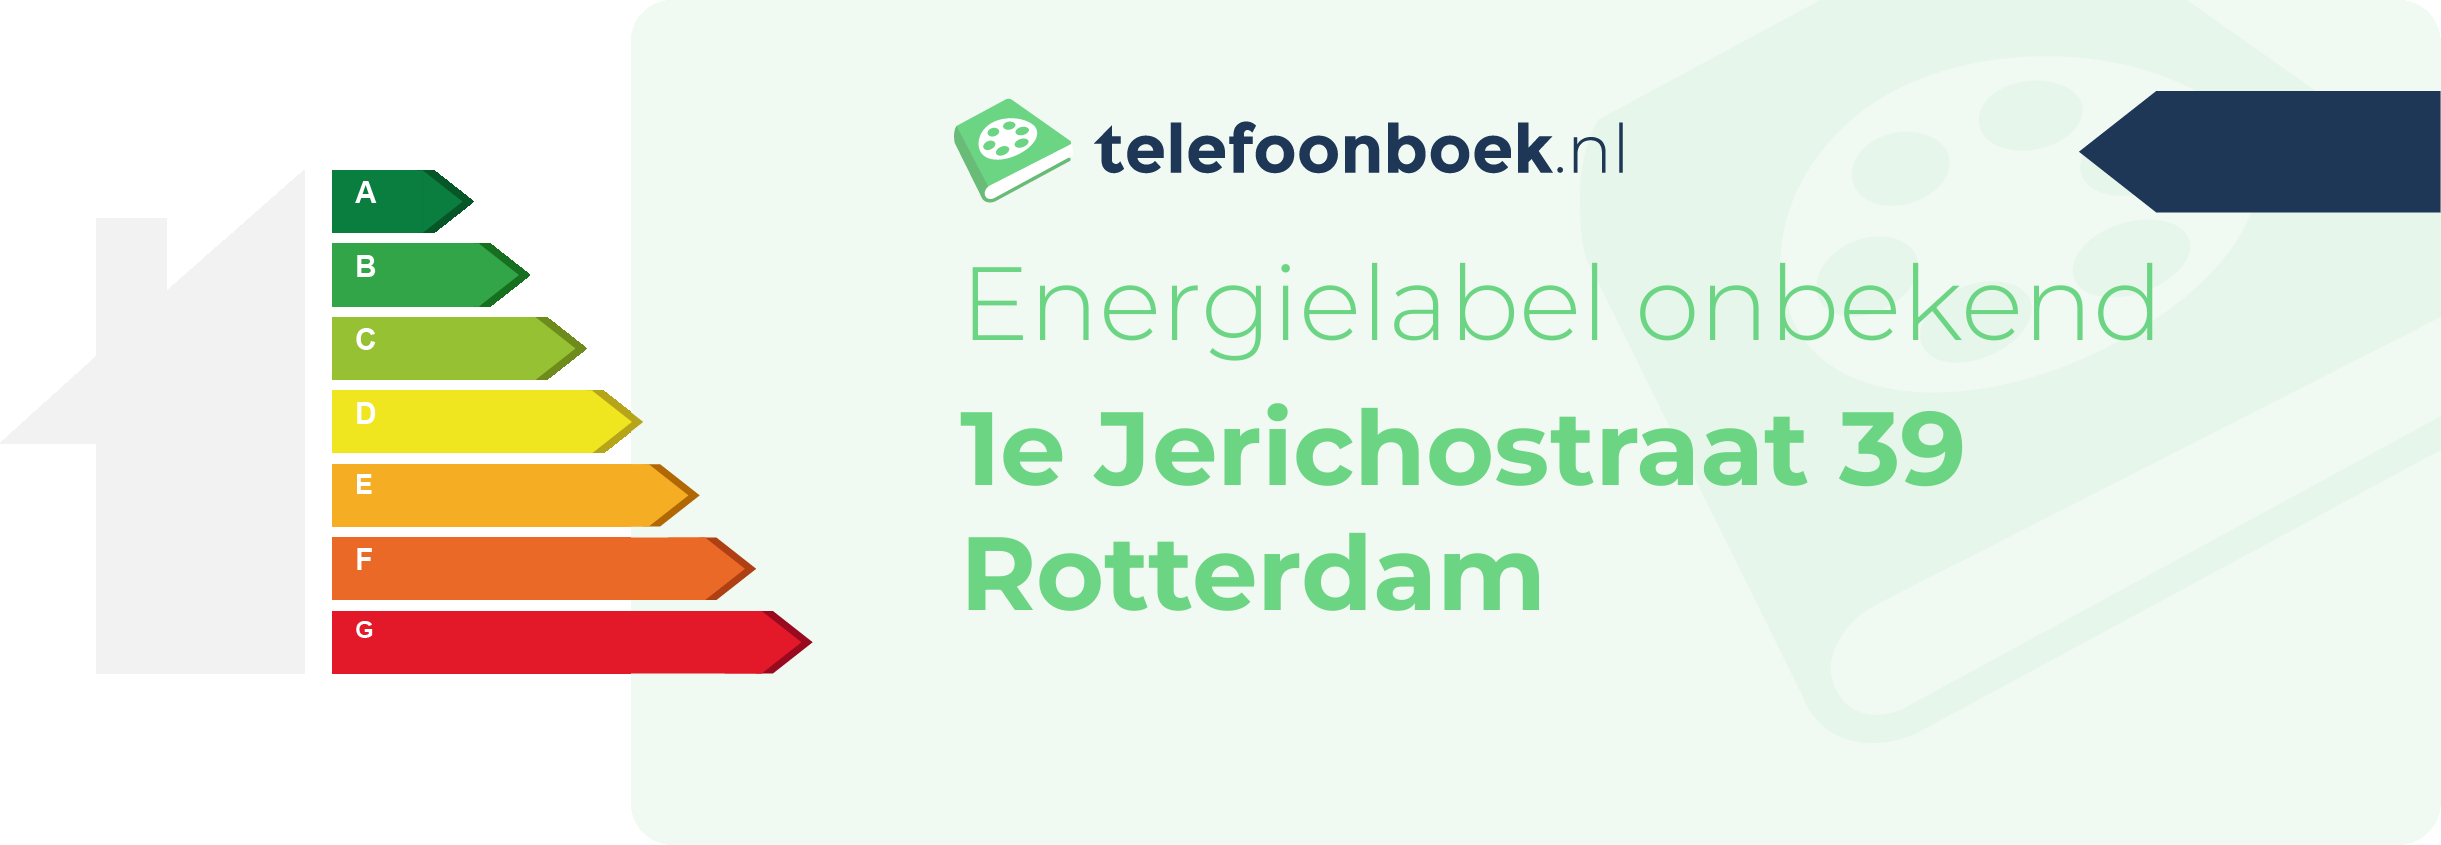 Energielabel 1e Jerichostraat 39 Rotterdam